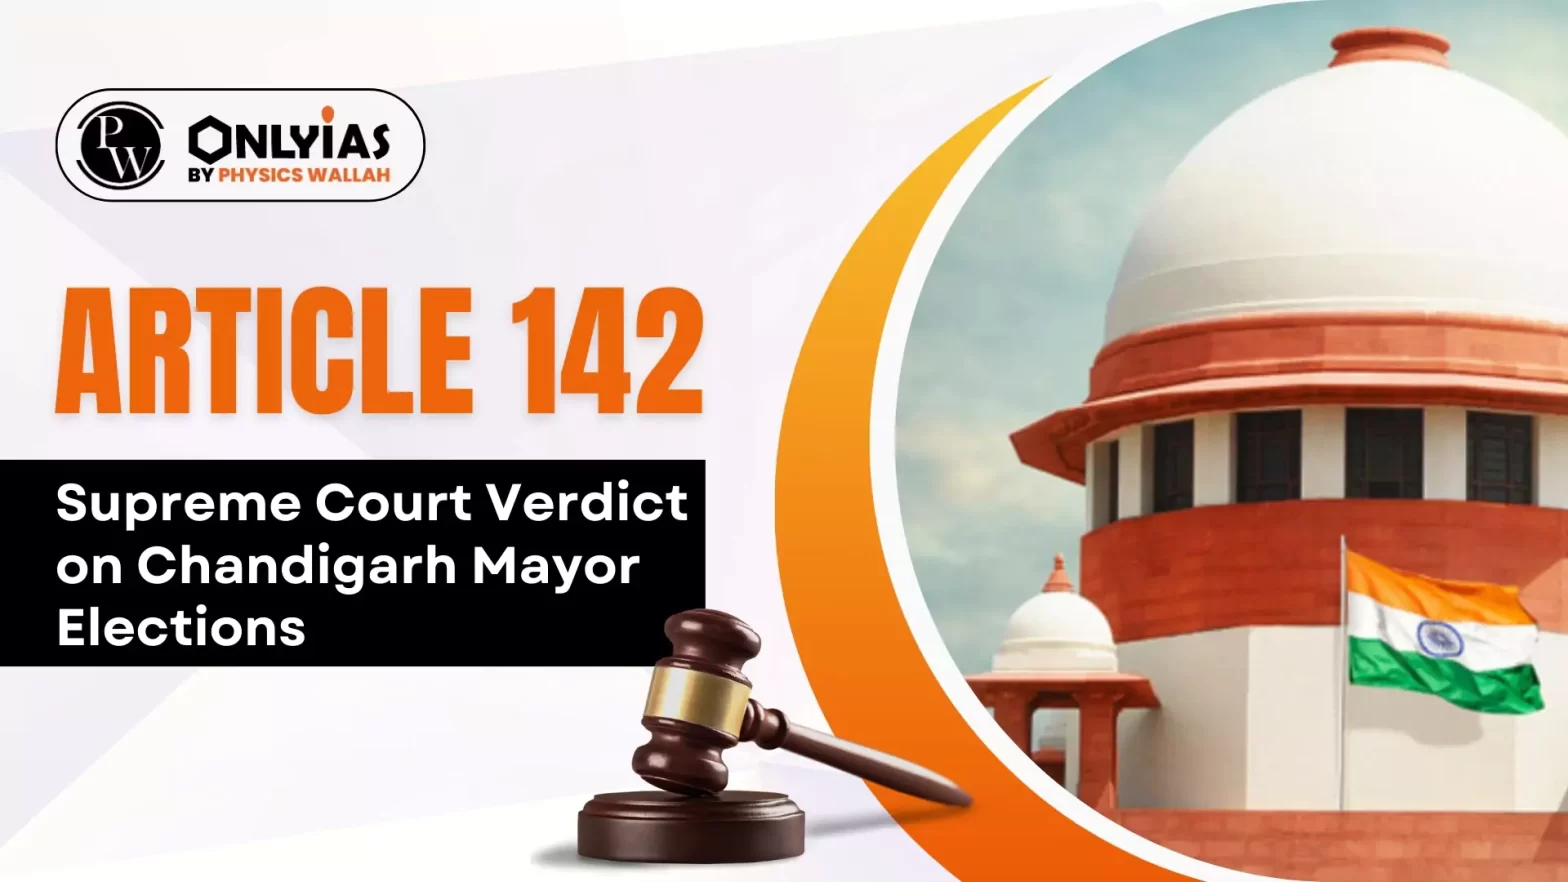 Article 142: Supreme Court Verdict on Chandigarh Mayor Elections